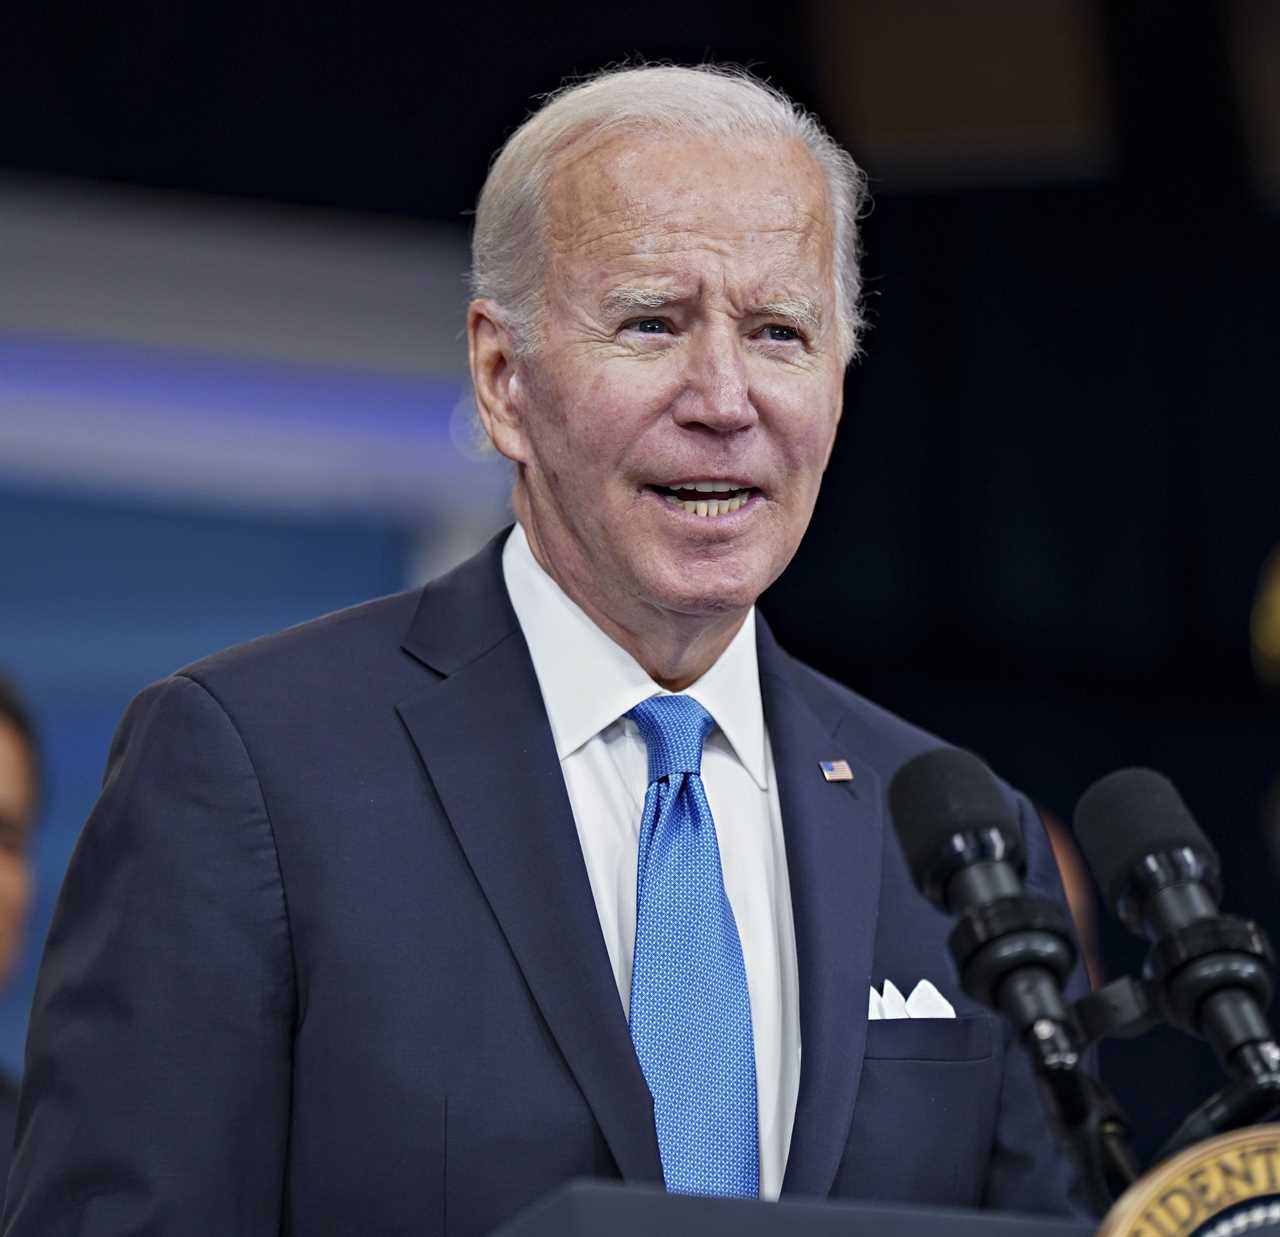 Joe Biden mocked after mispronouncing Rishi Sunak’s name in speech